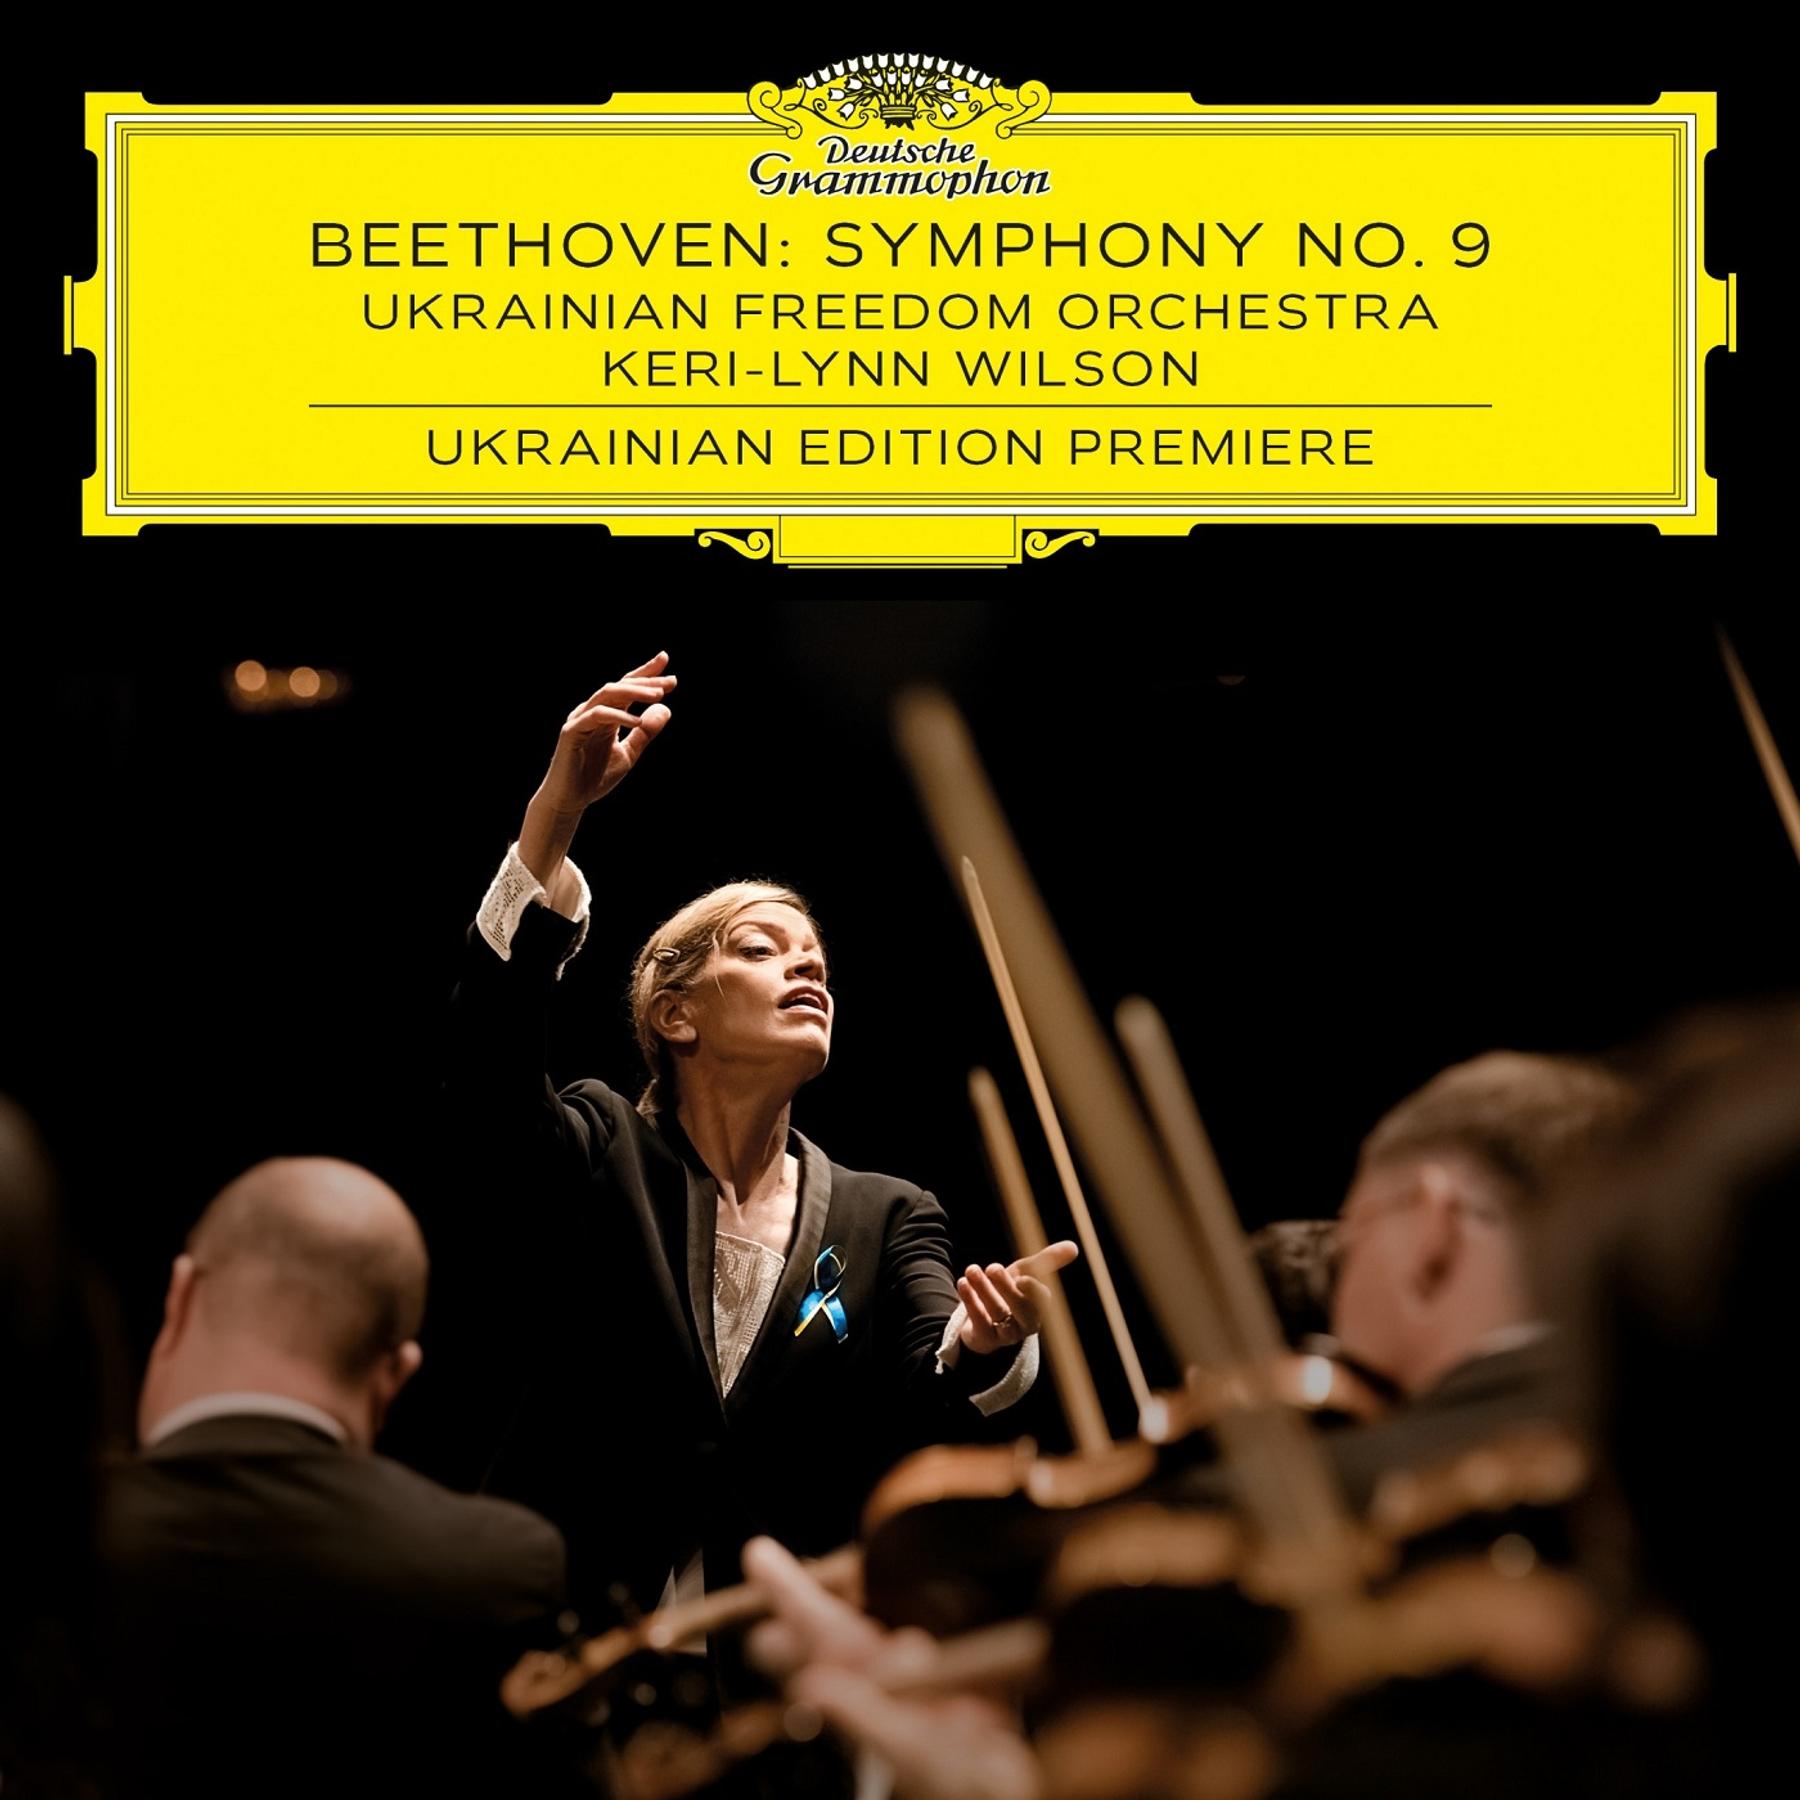 Aufnahmeprüfung: Keri-Lynn Wilson dirigiert Beethovens Neunte Symphonie